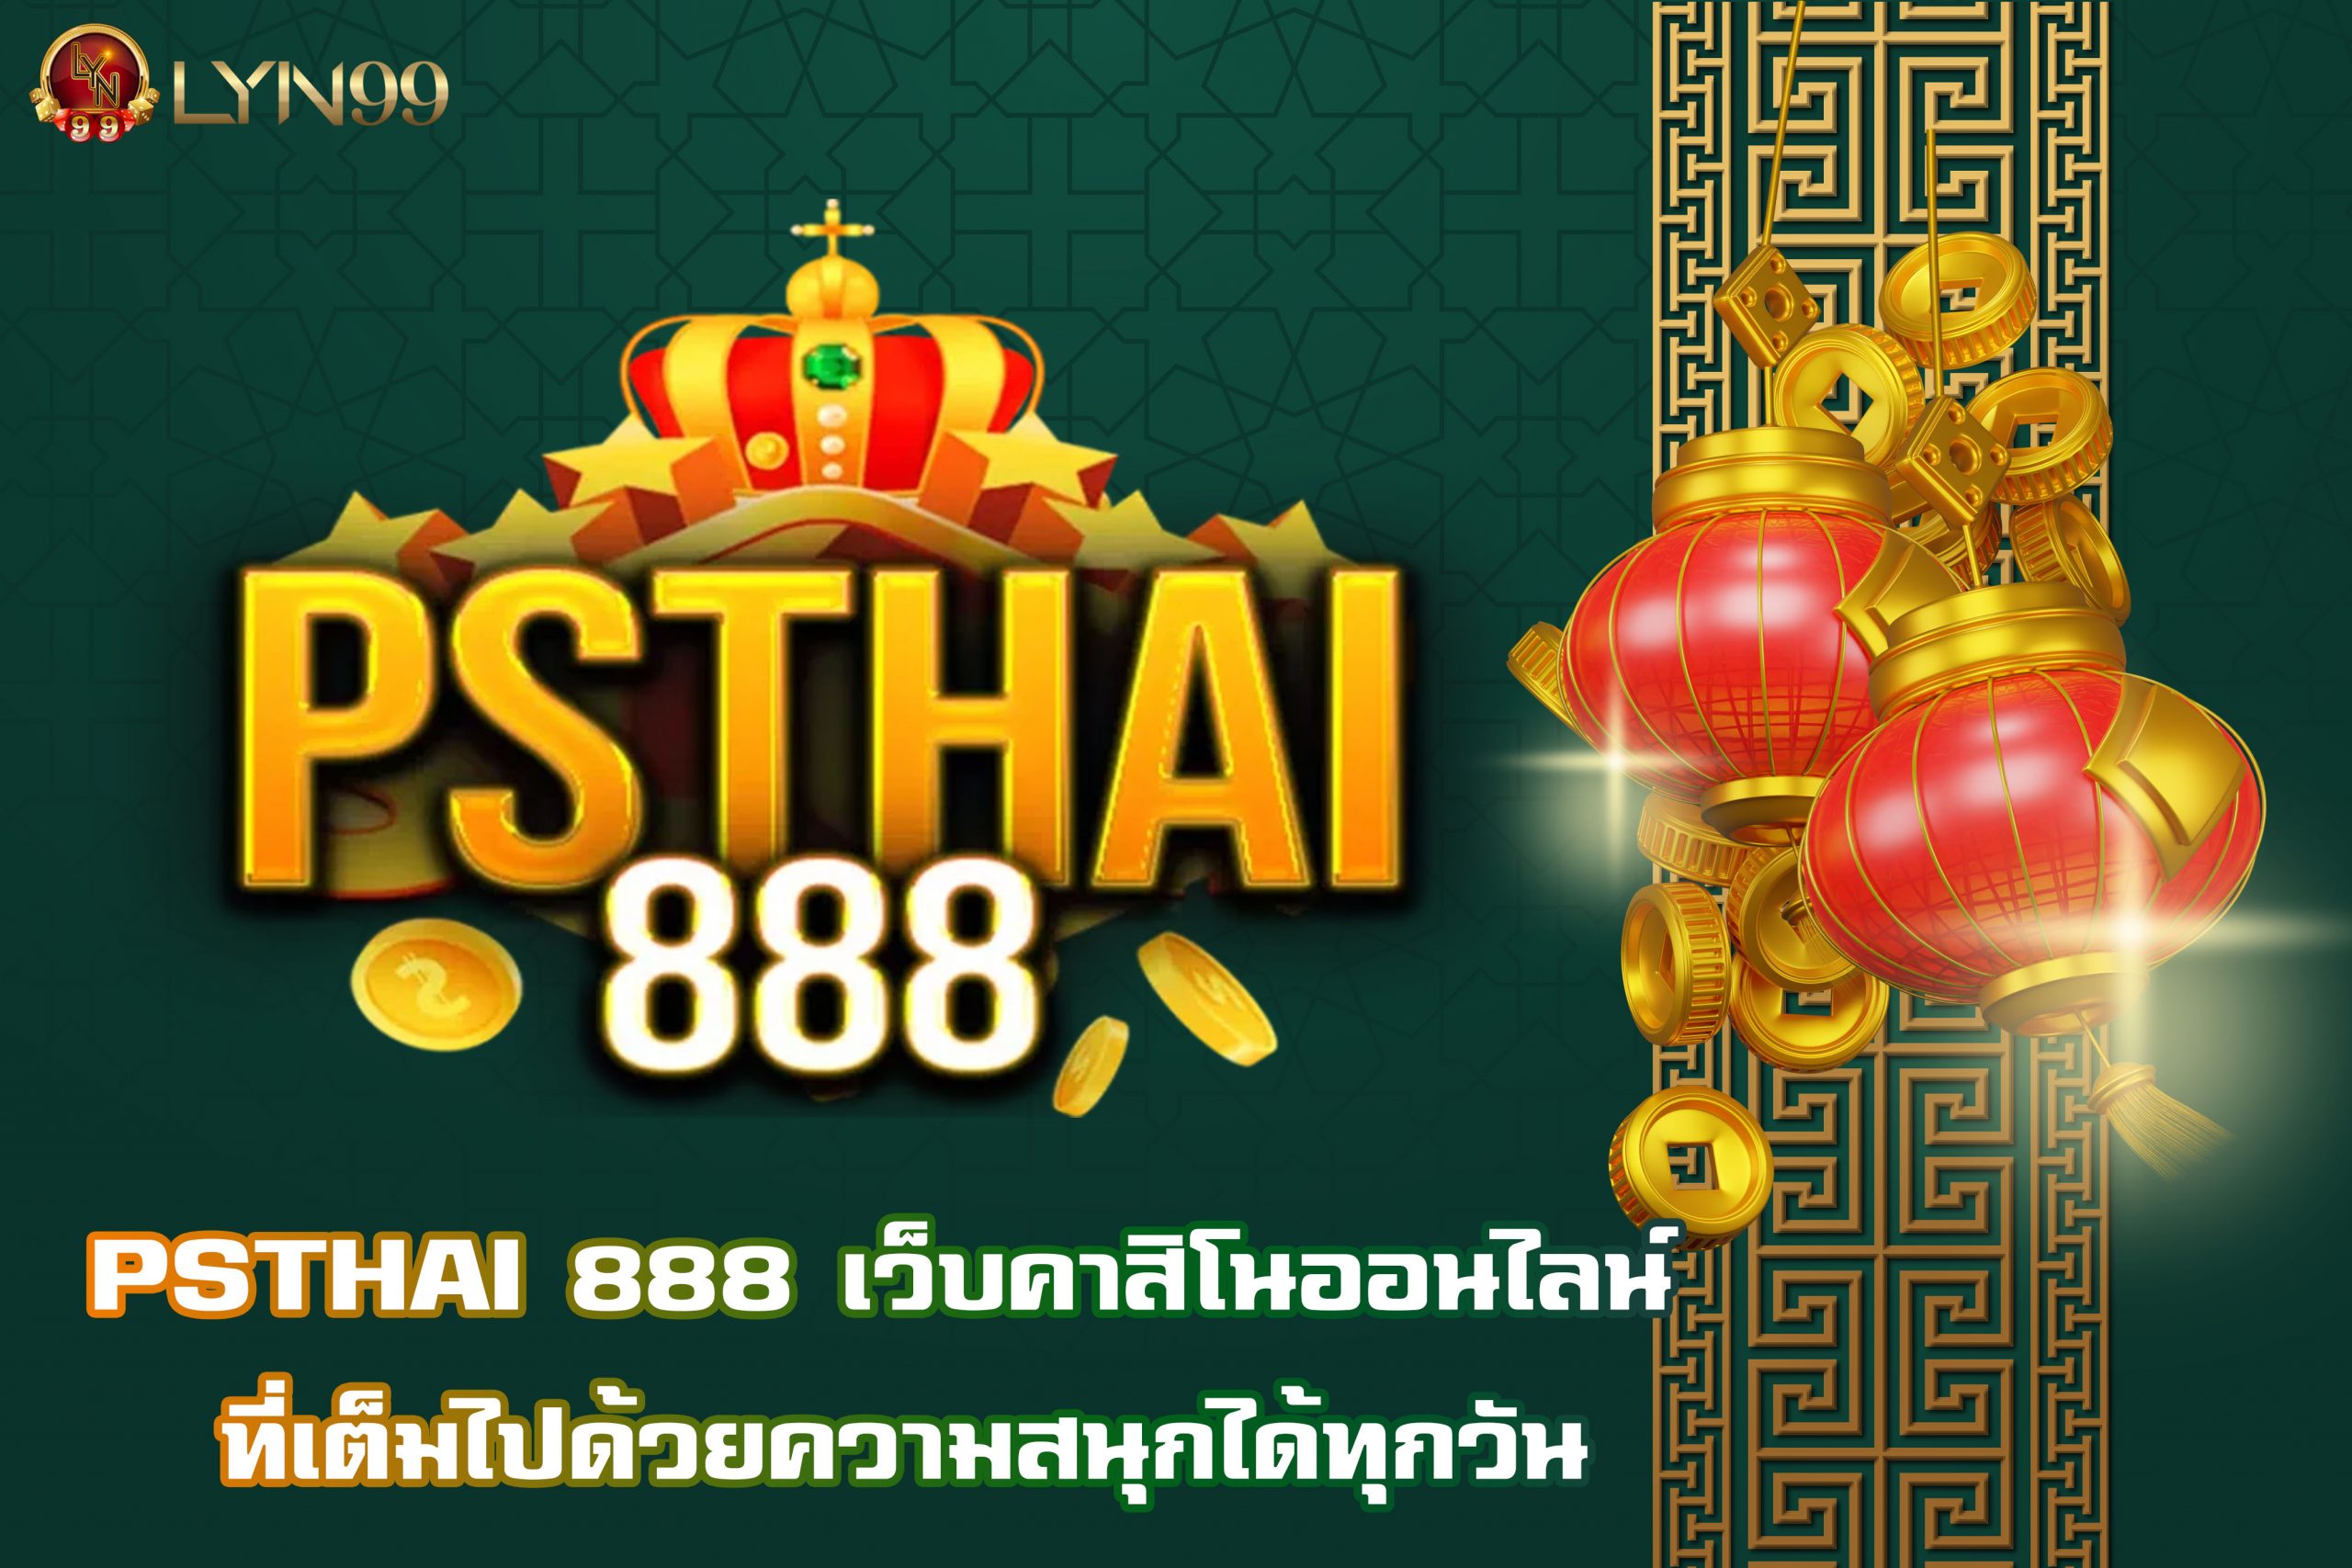 PSTHAI 888 เว็บคาสิโนออนไลน์ ที่เต็มไปด้วยความสนุกได้ทุกวัน